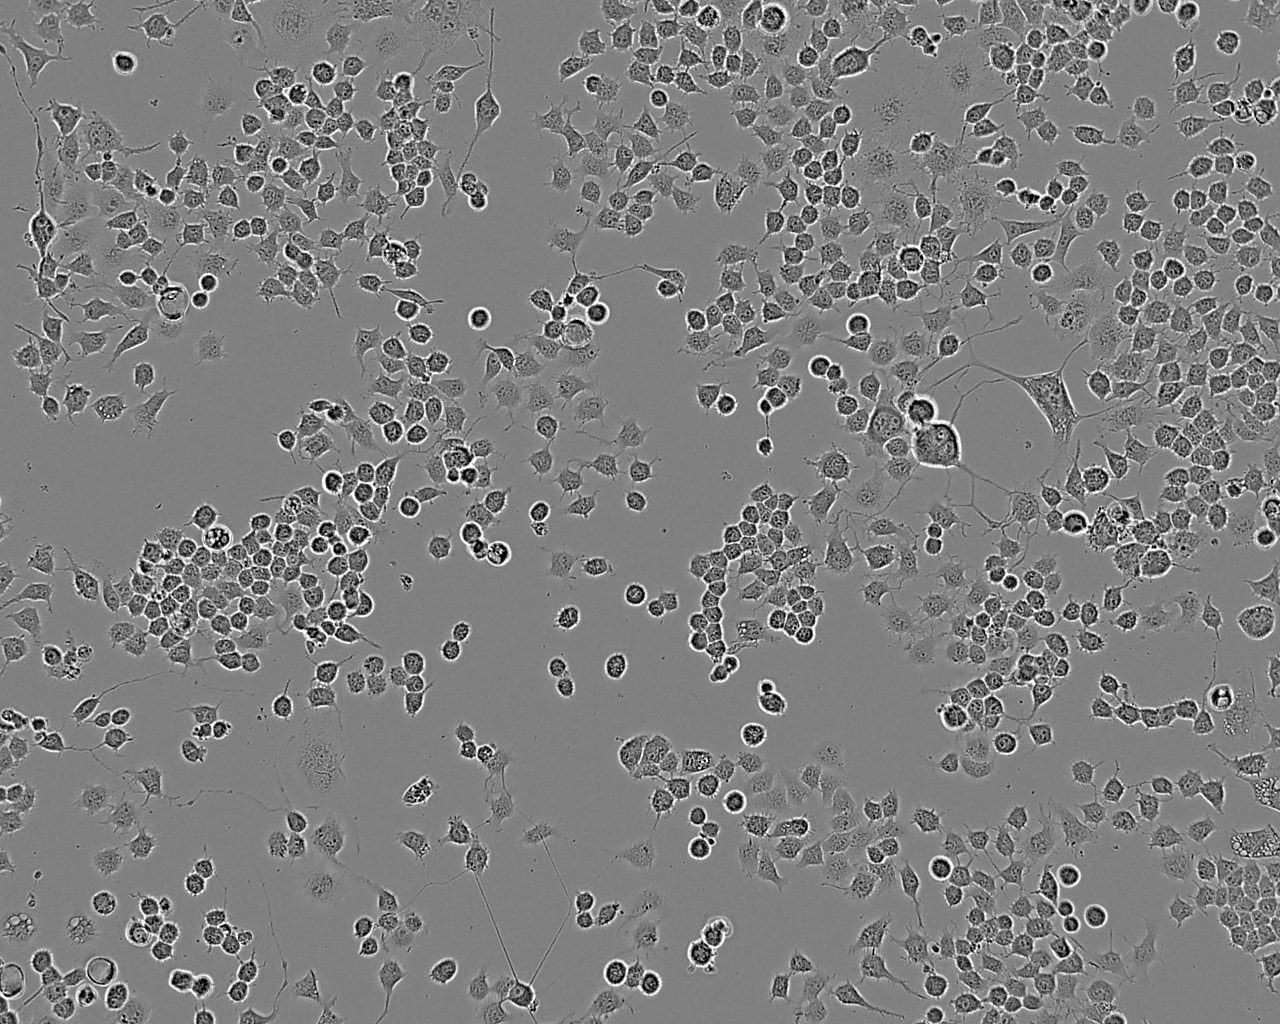 SW839 epithelioid cells人肾癌细胞系,SW839 epithelioid cells